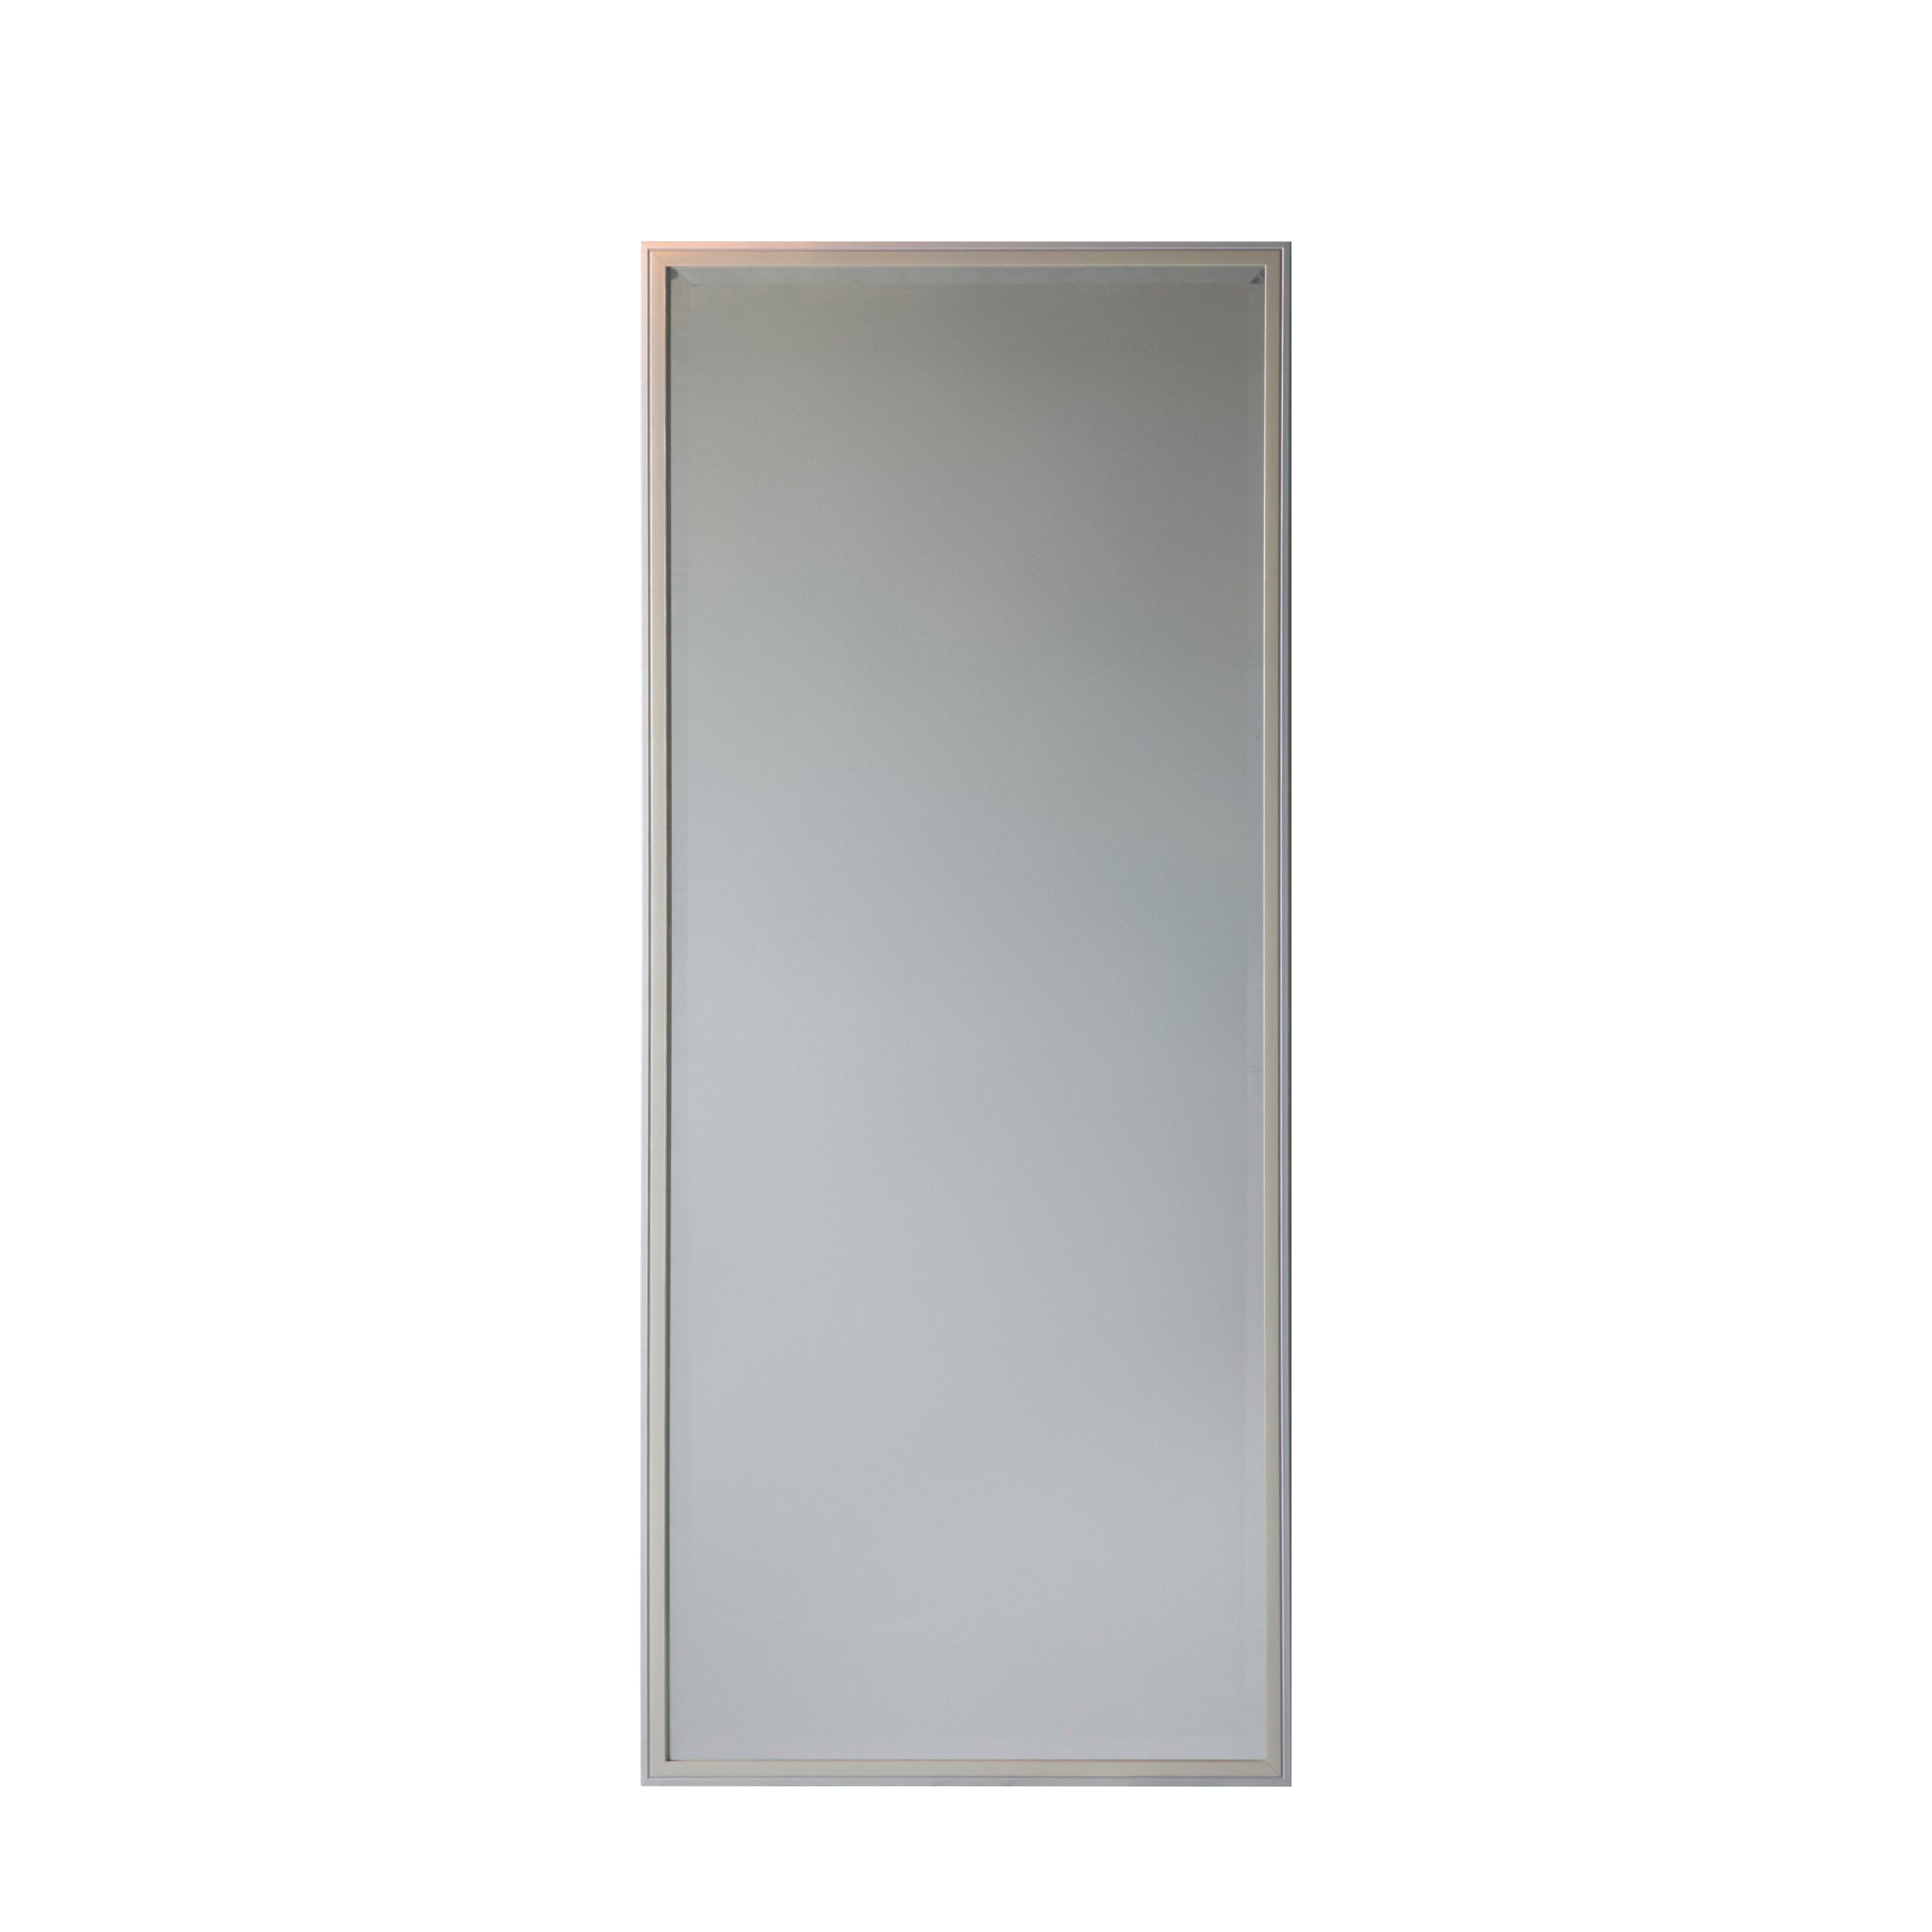 Gallery Direct Floyd Leaner Mirror